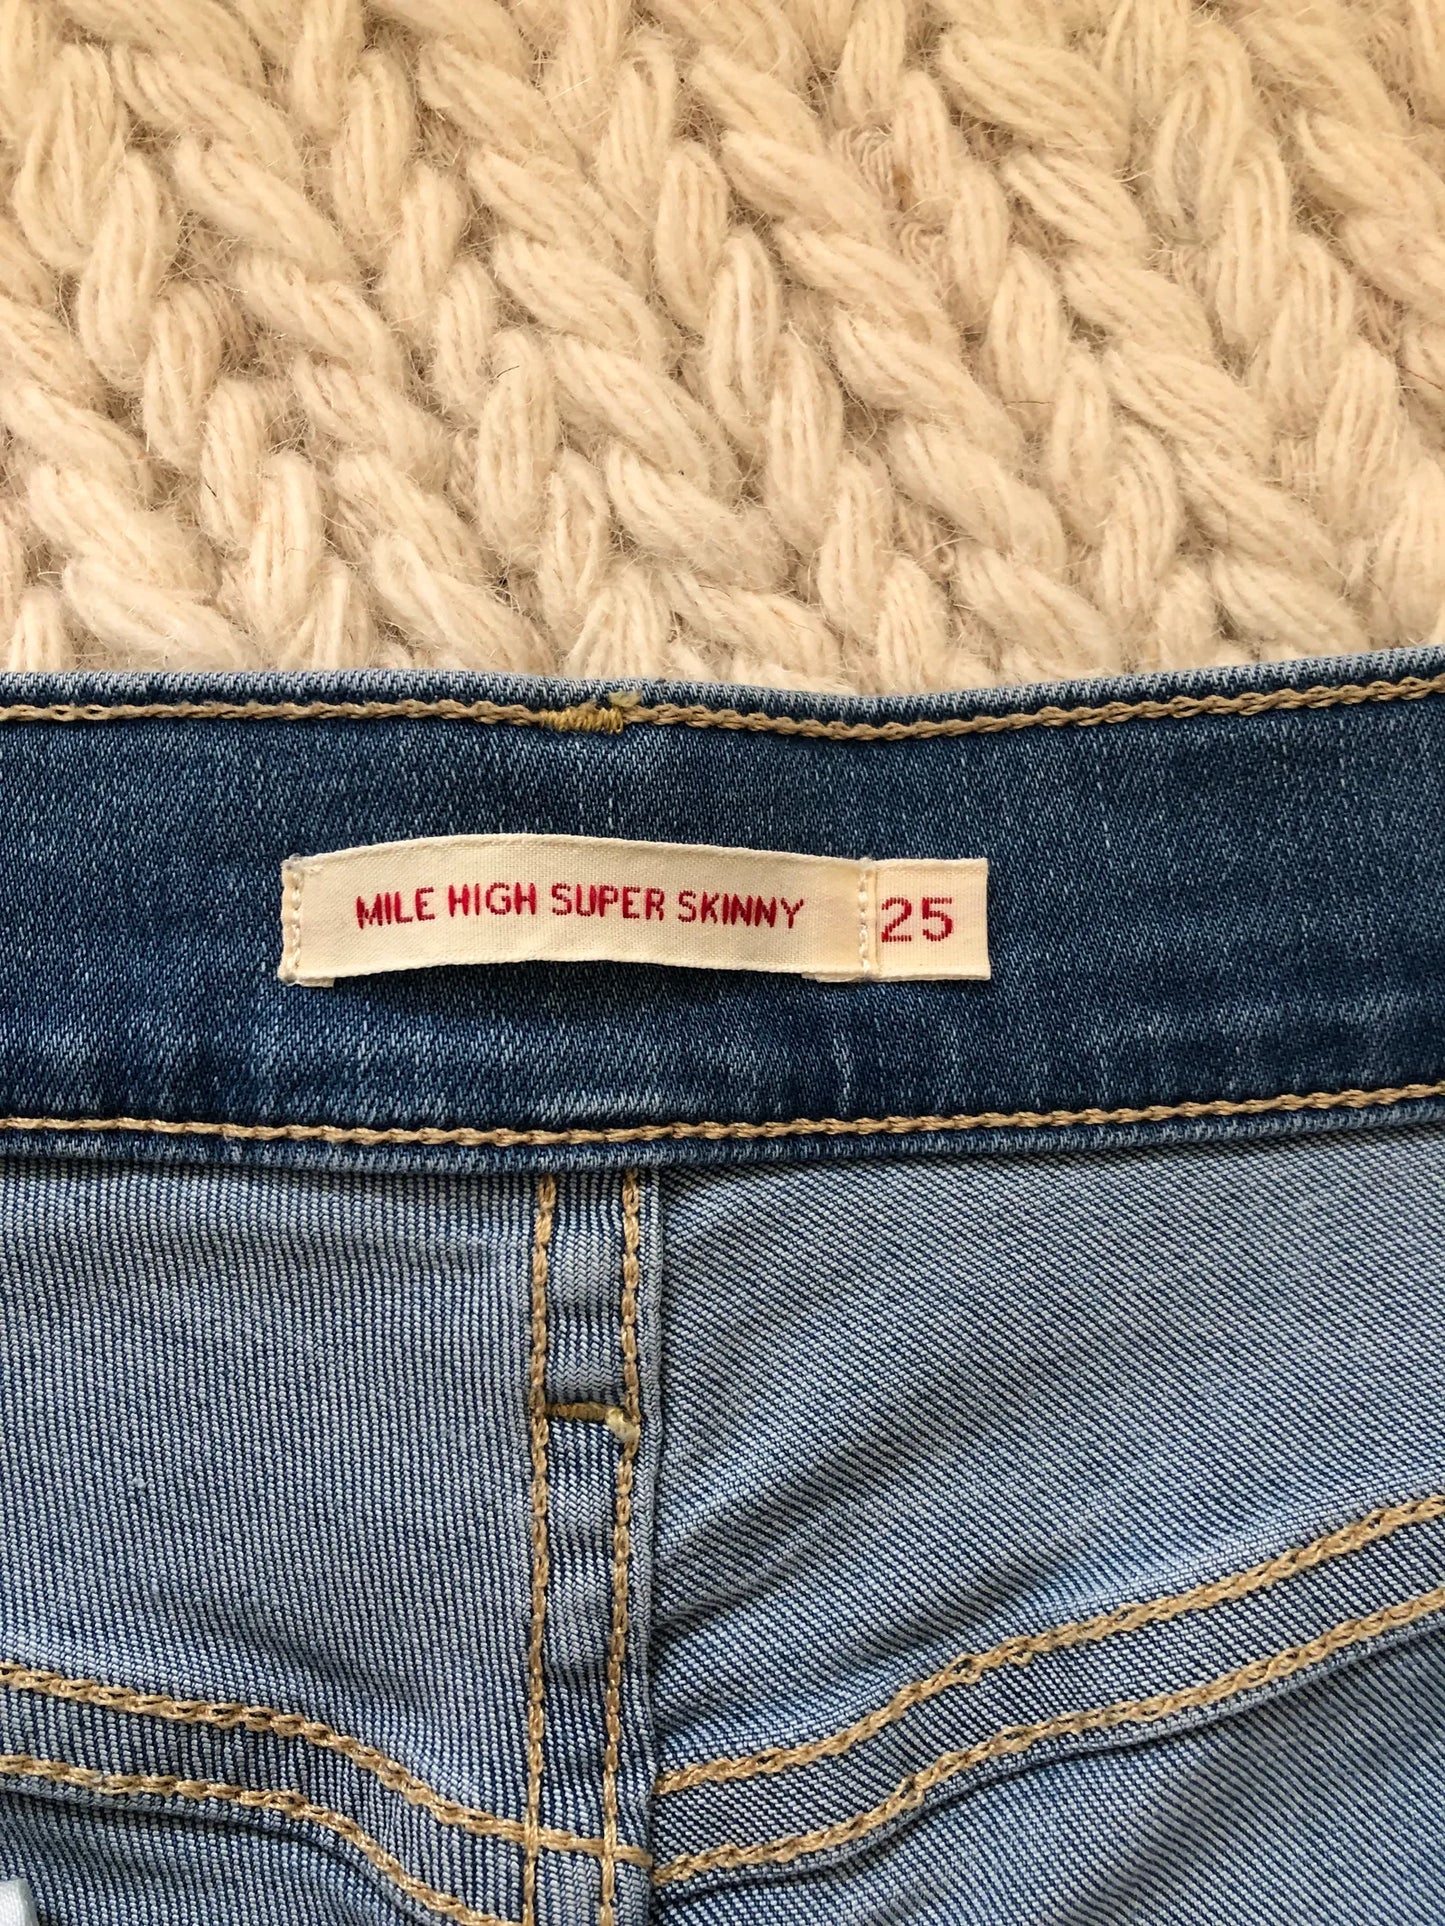 Levi's Mile High Super Skinny-jeans